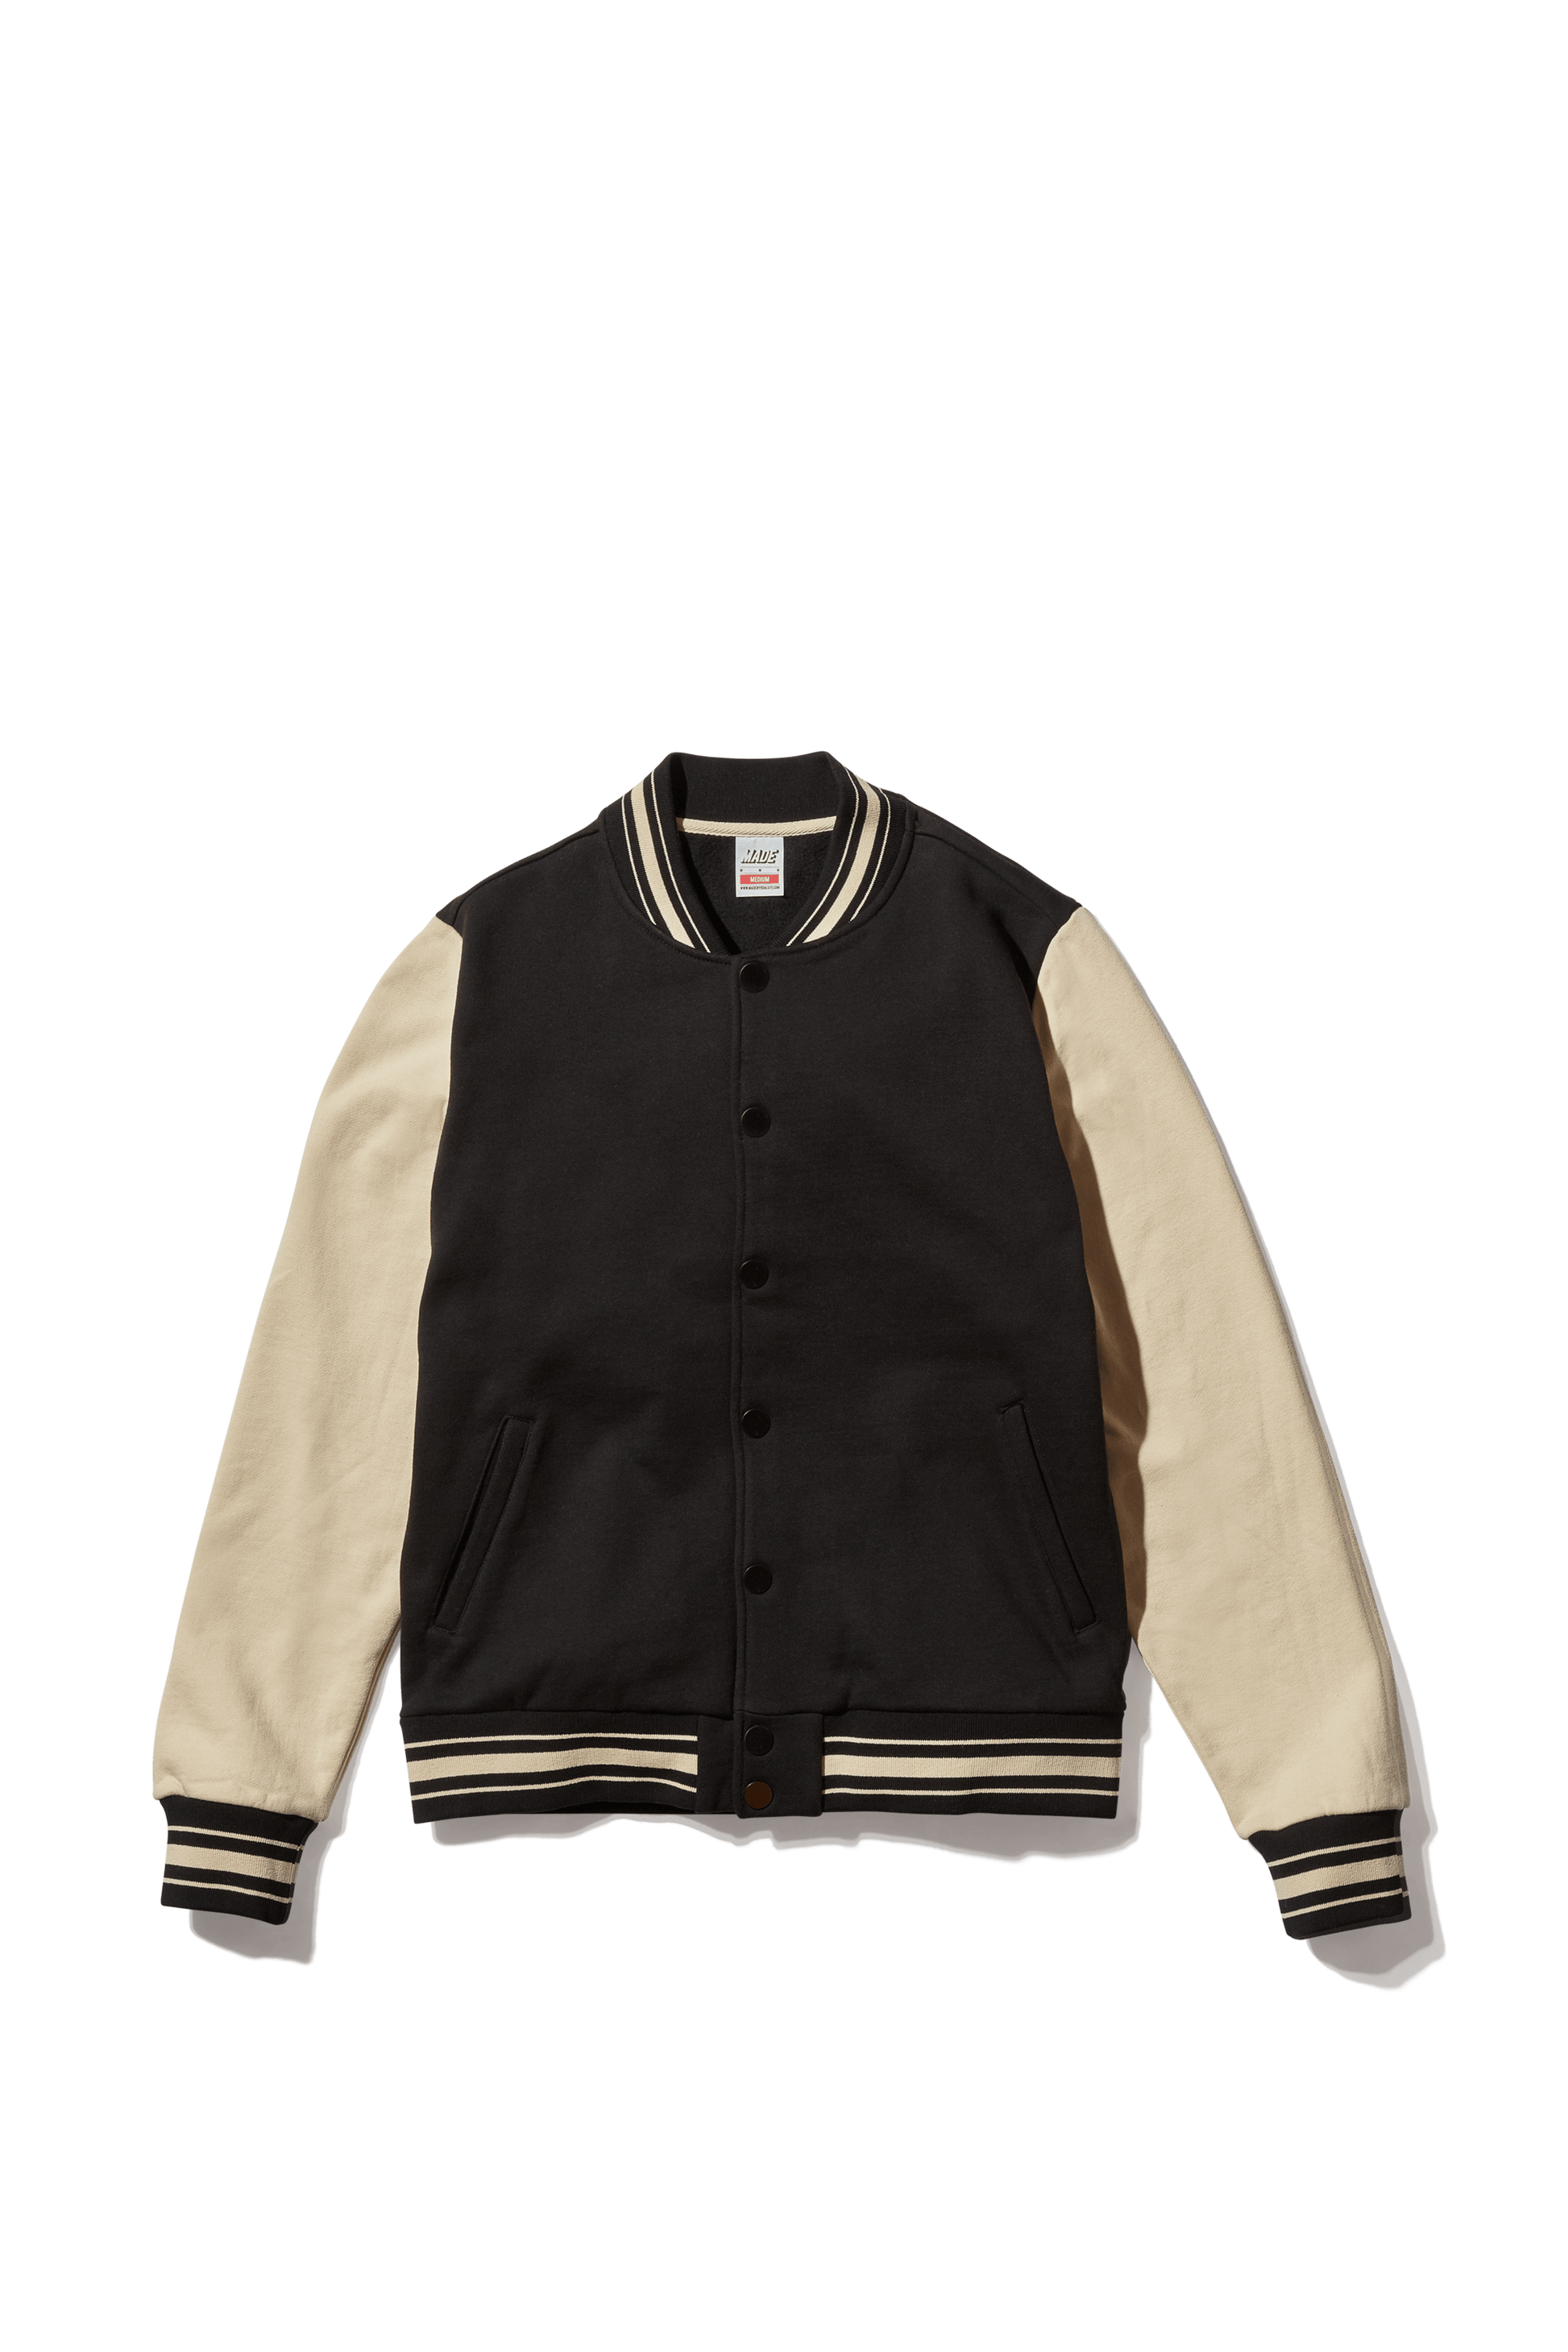 Jacket Makers Varsity Jacket with Cream Sleeves